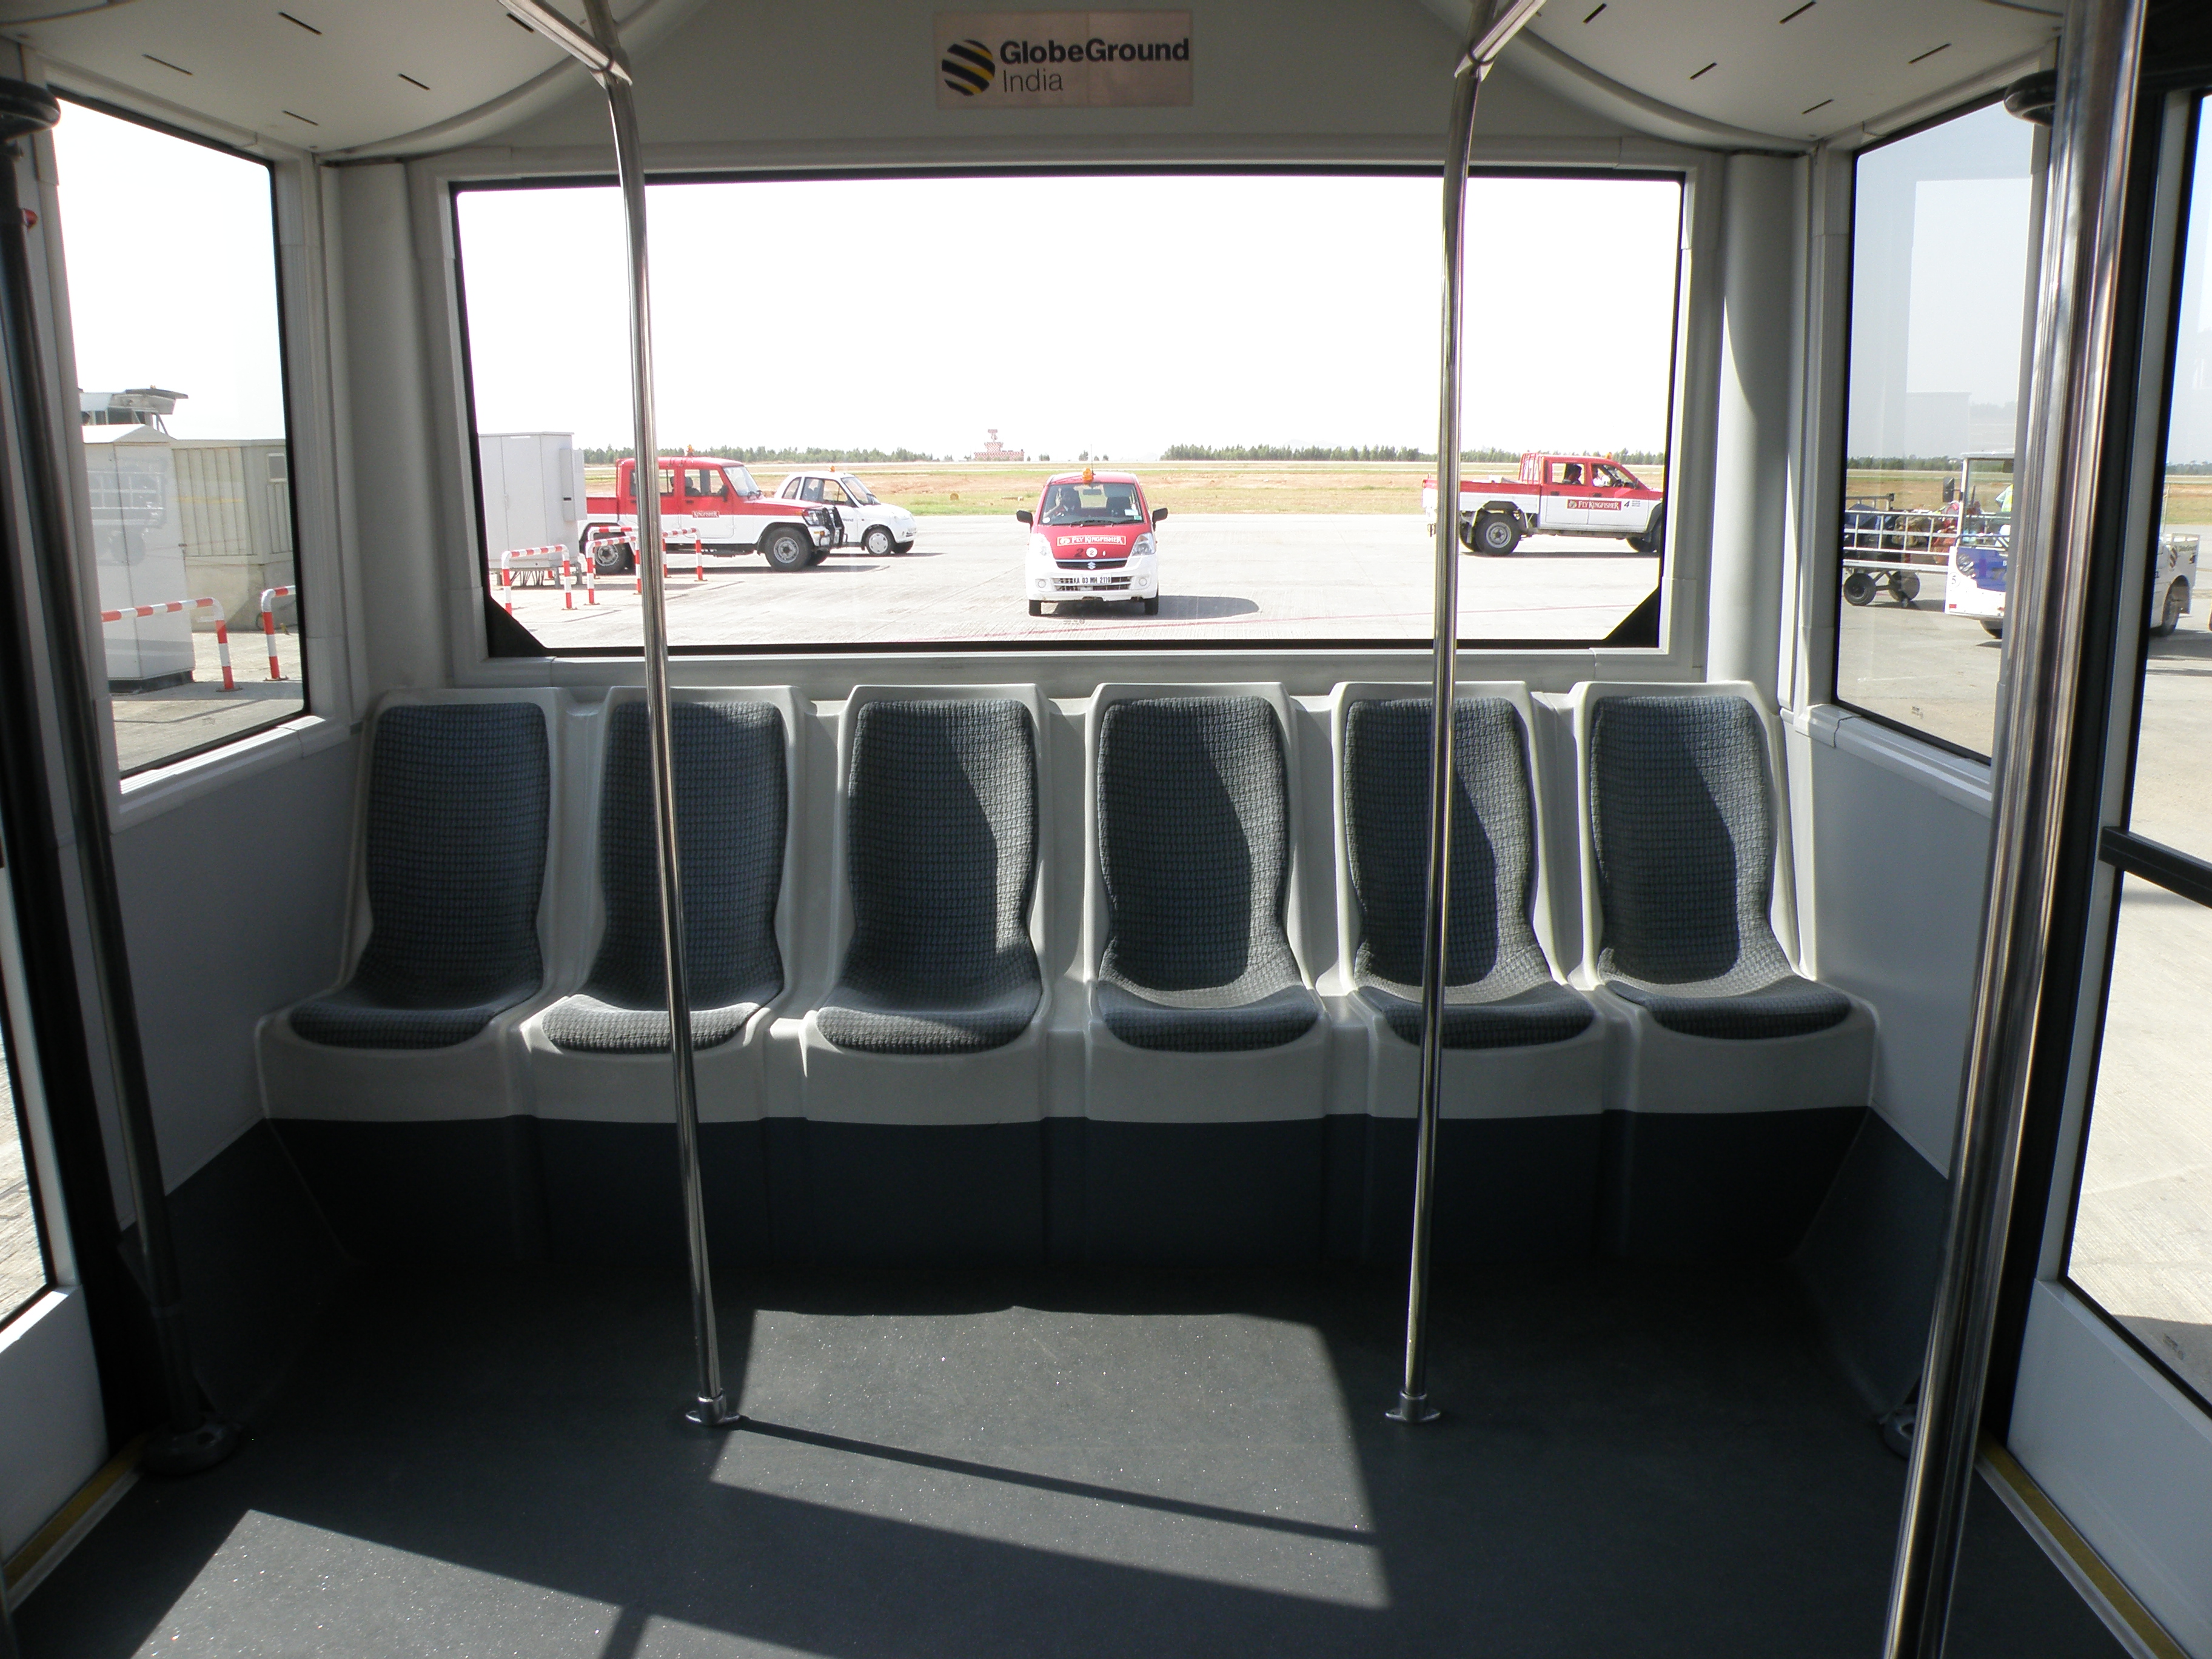 File:Cobus 3000 back interior.JPG - Wikimedia Commons